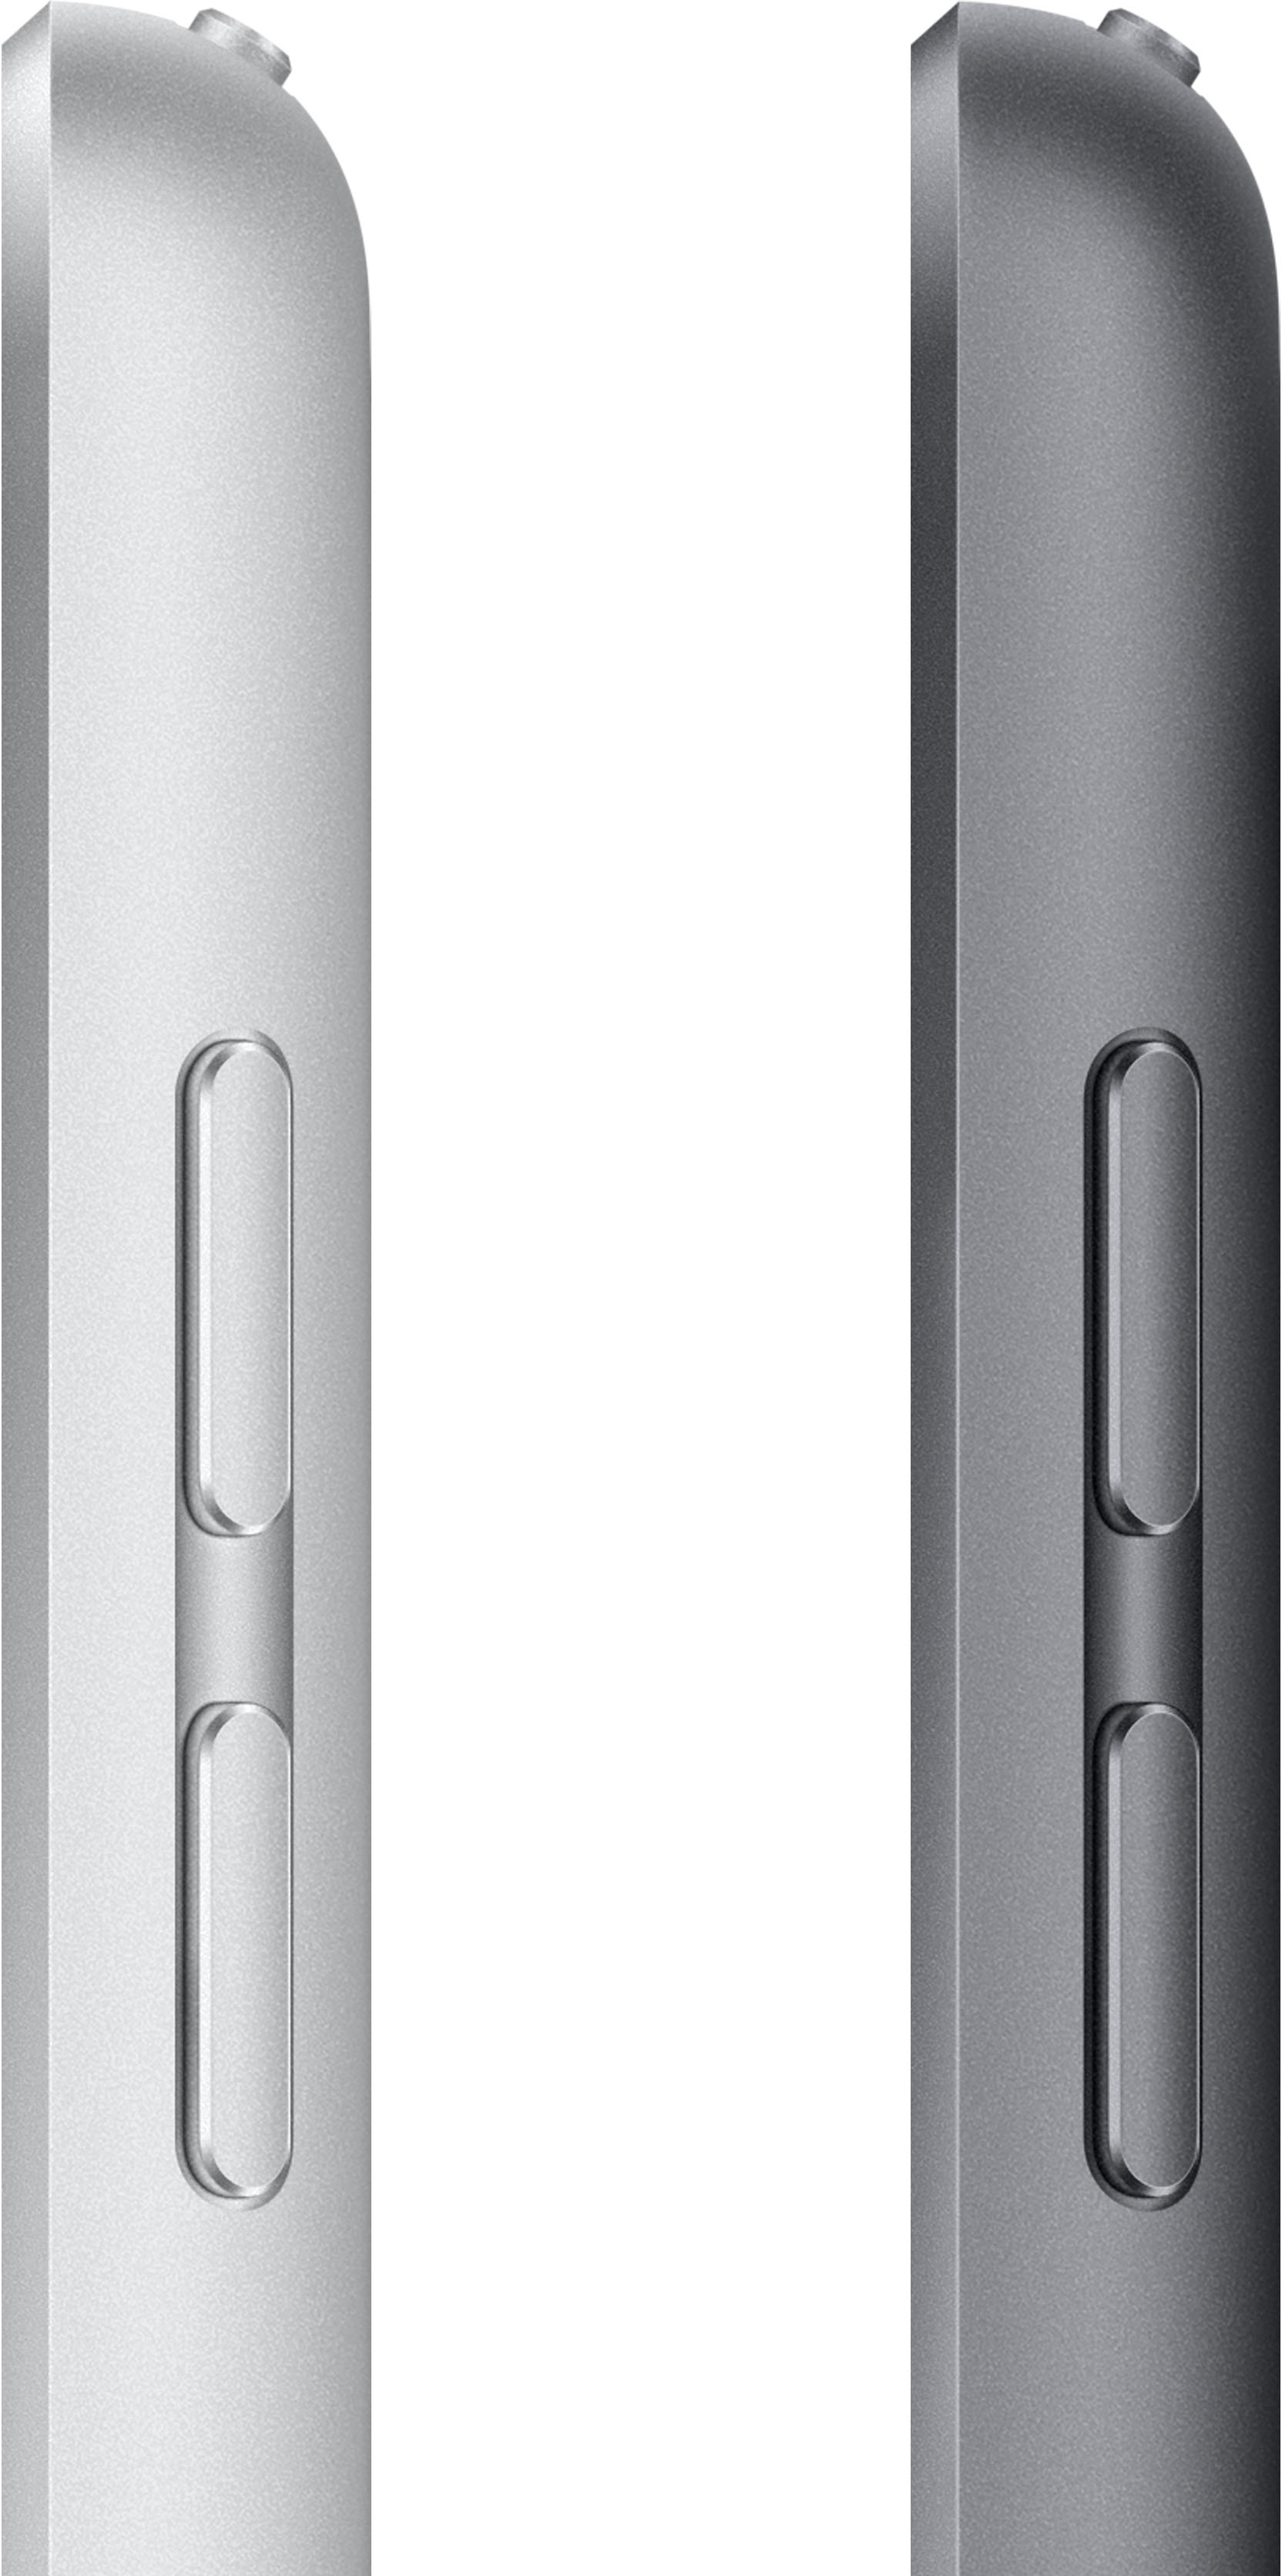 64gb Silver Ipad 9 Th Generation, Light Sensor, Screen Size: 10.2